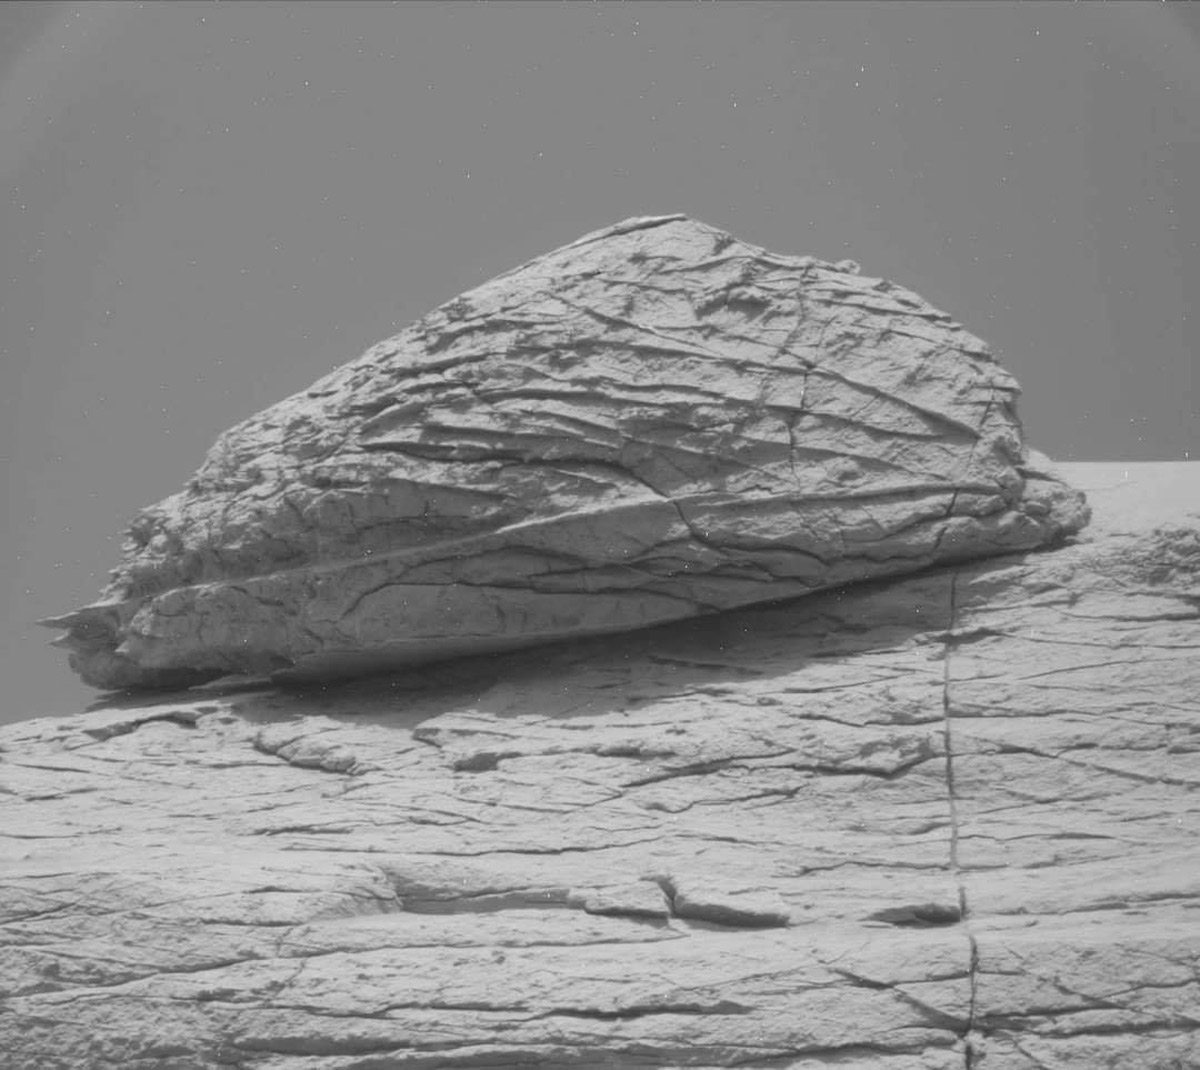 Walnut shaped rock on Mars